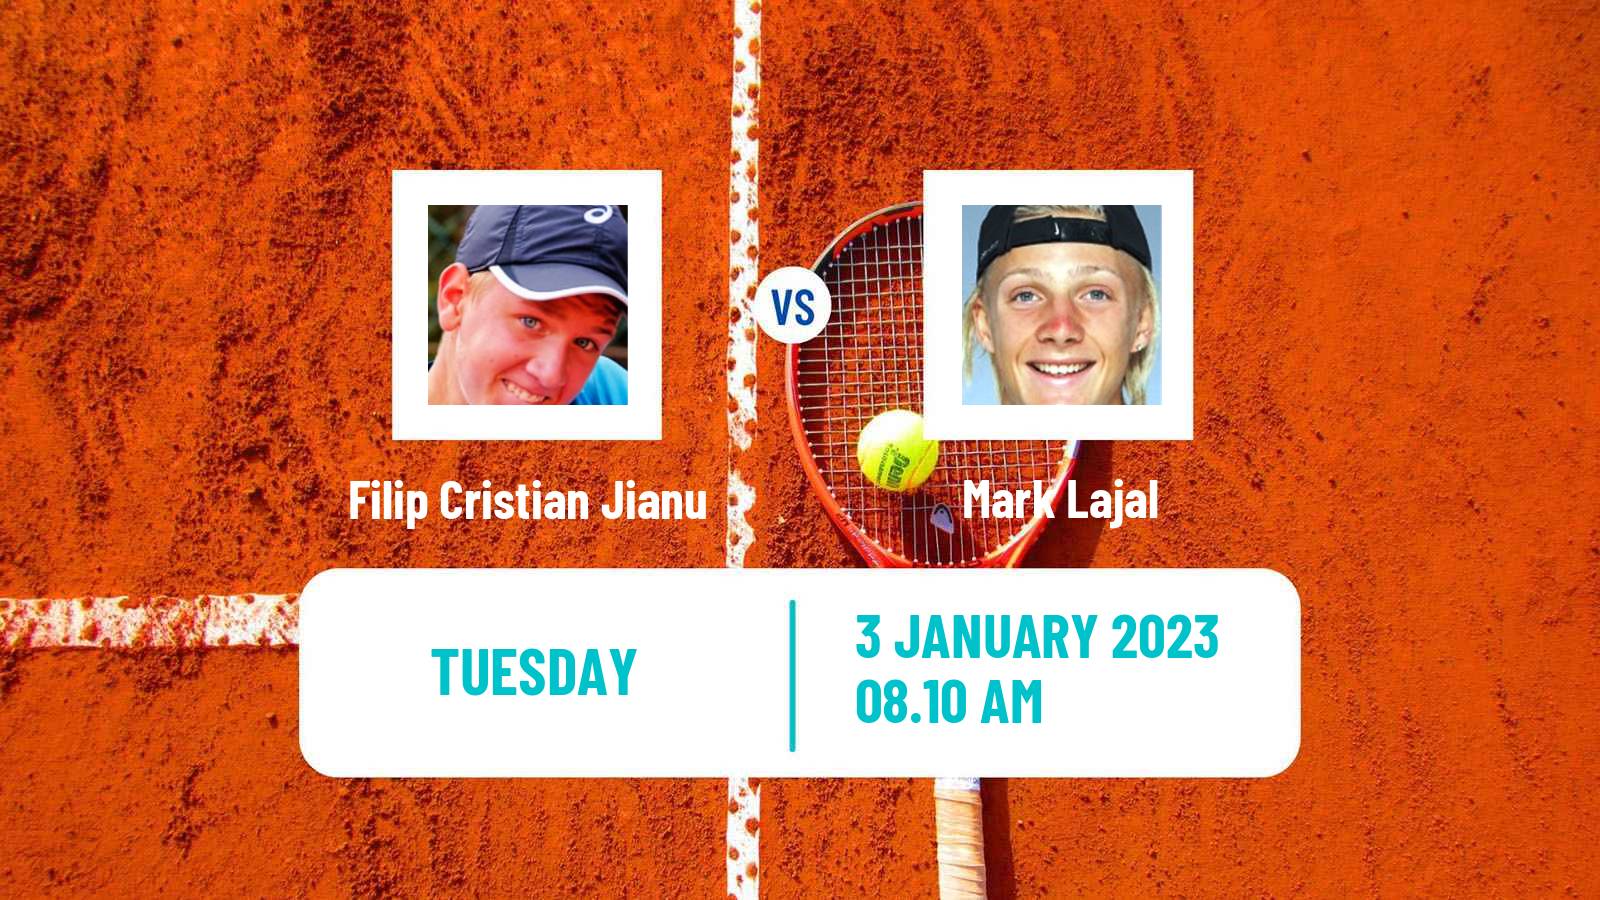 Tennis ATP Challenger Filip Cristian Jianu - Mark Lajal